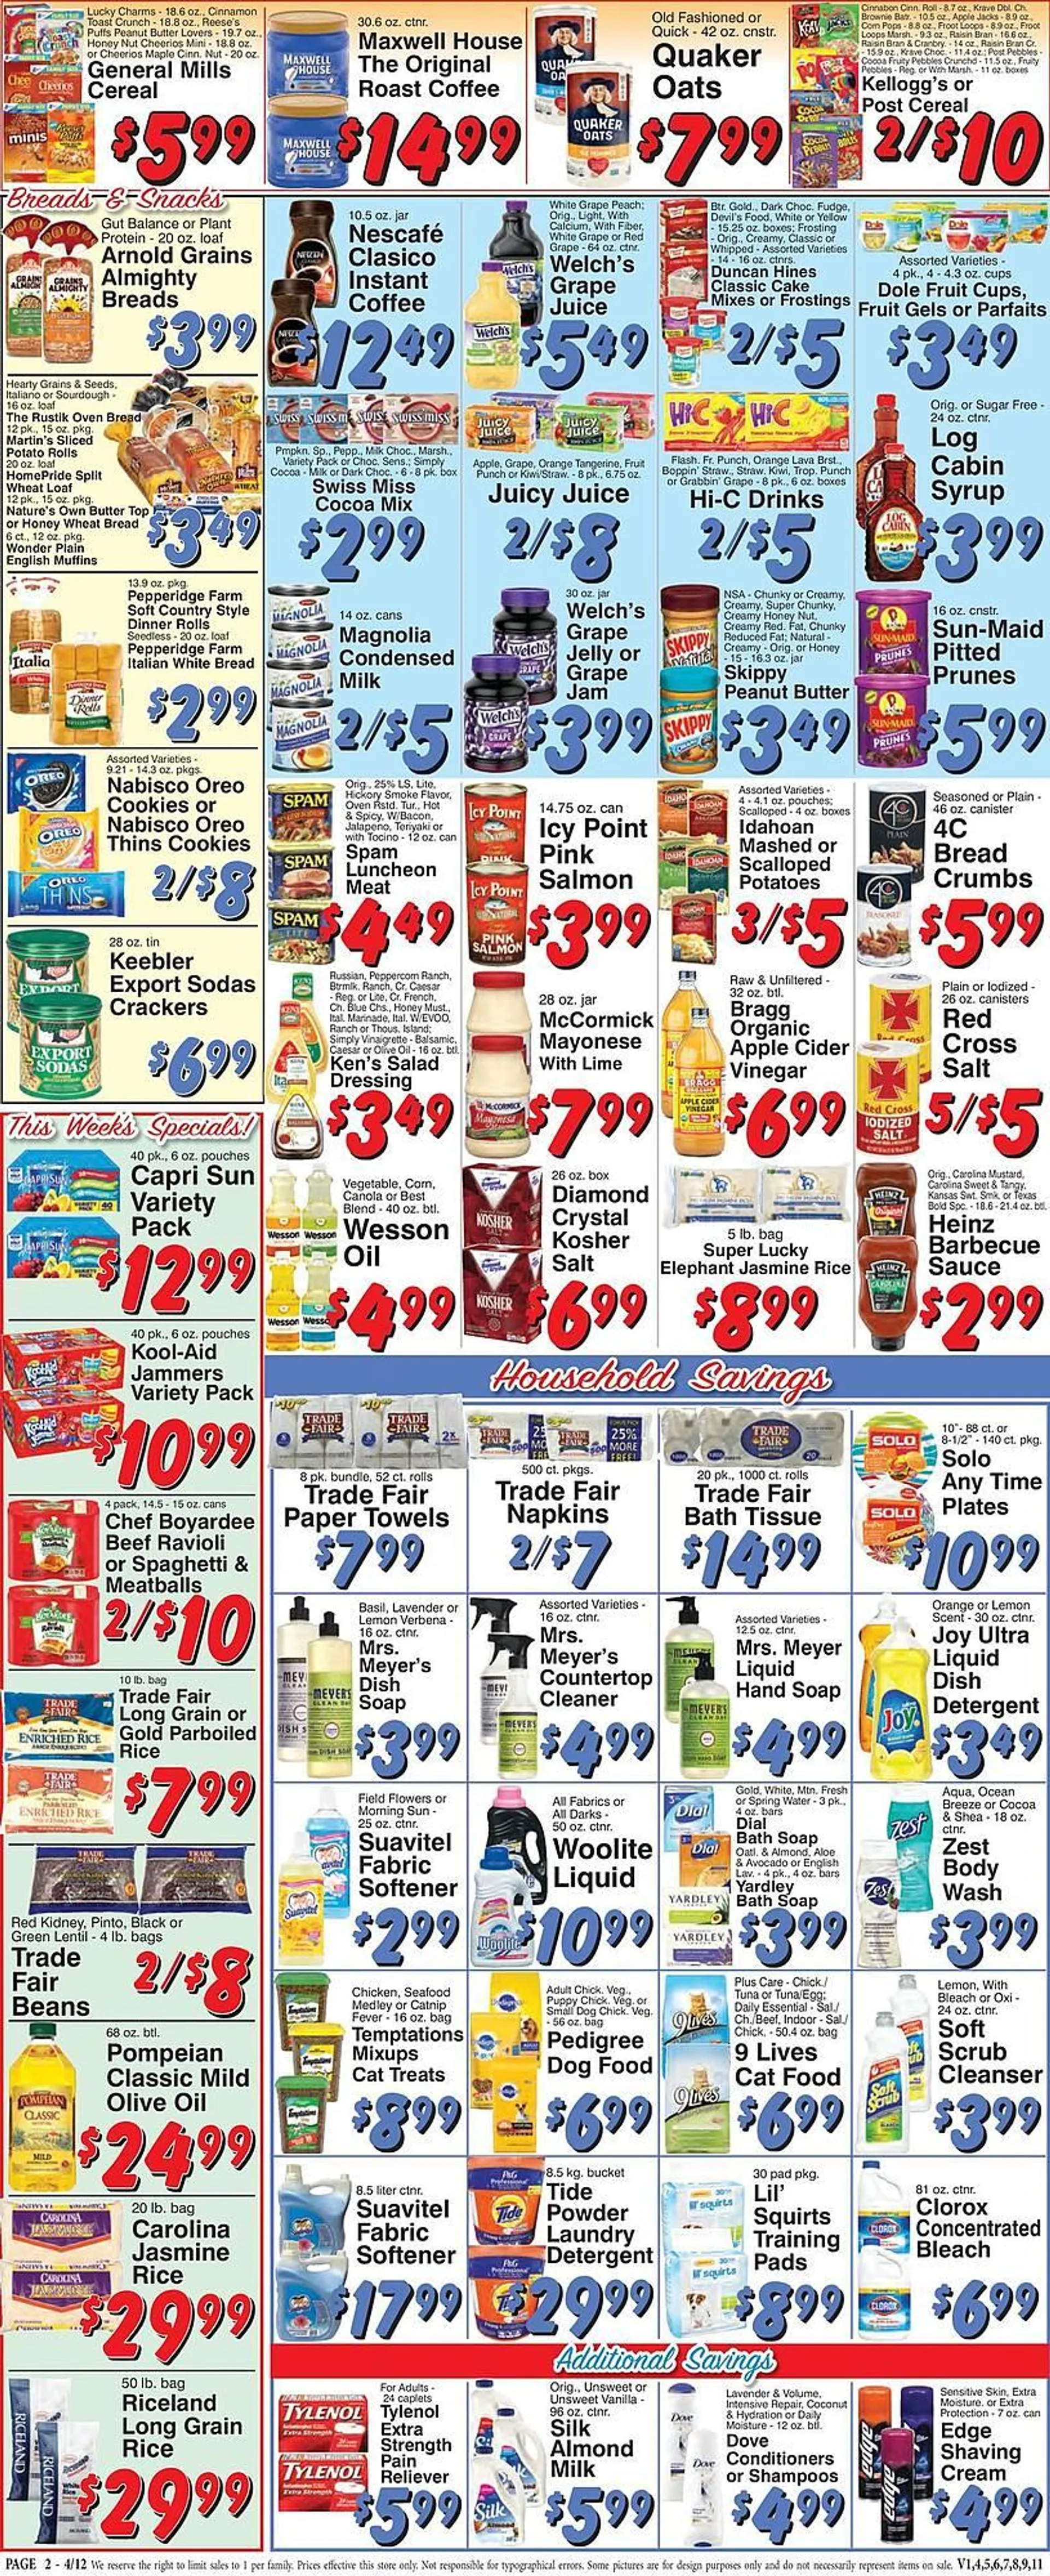 Trade Fair Supermarket Weekly Ad - 2